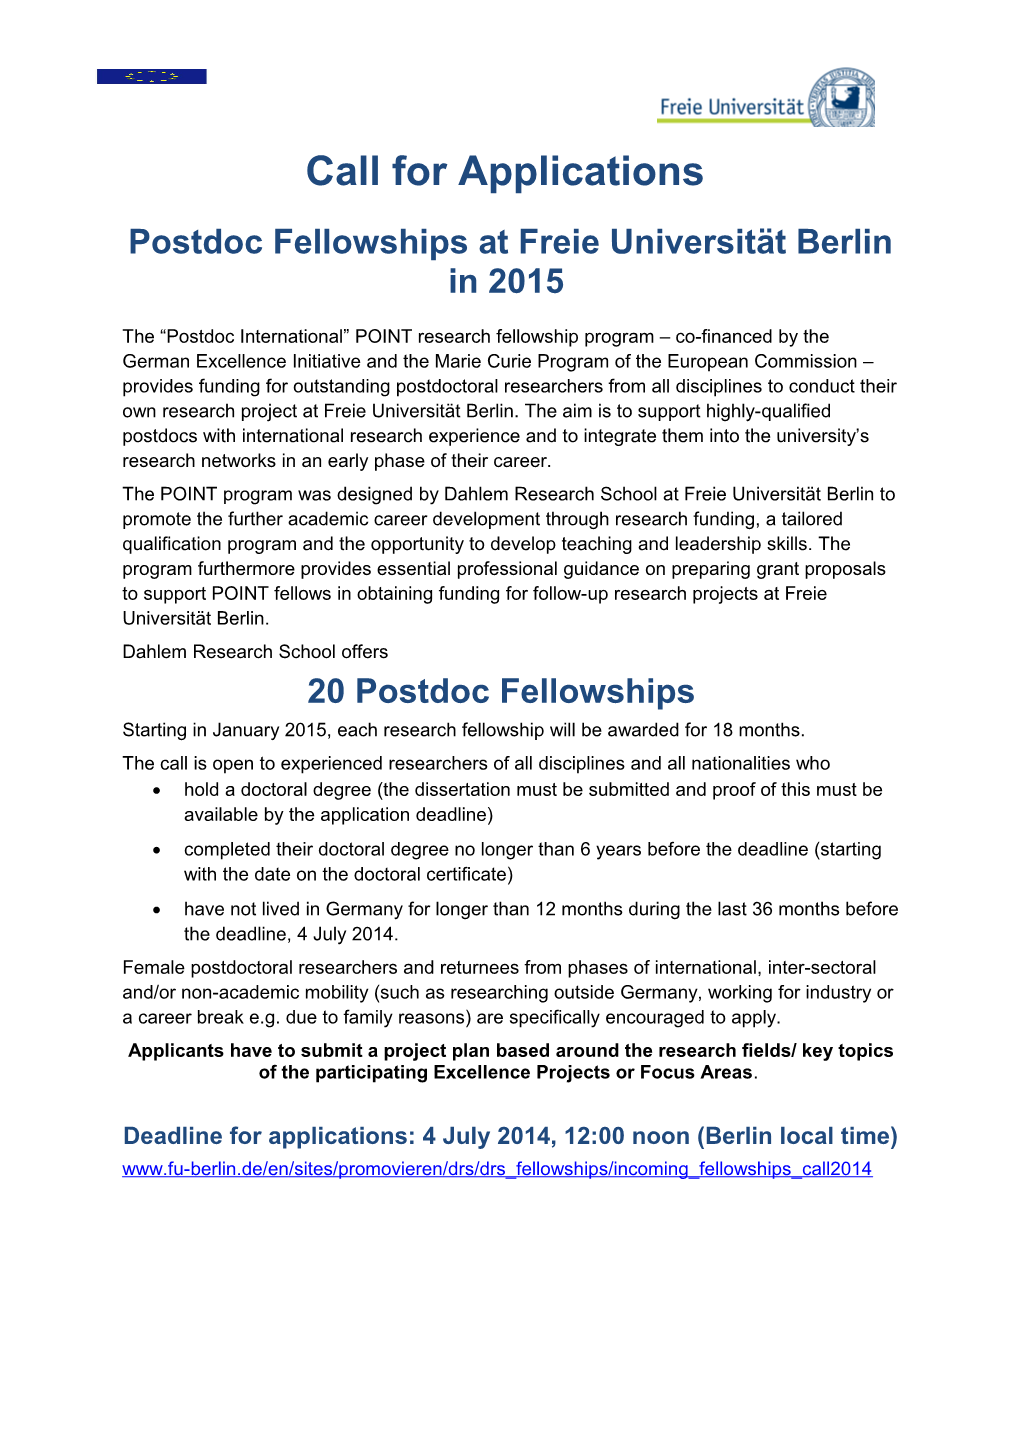 Postdoc Fellowships at Freie Universität Berlin in 2015